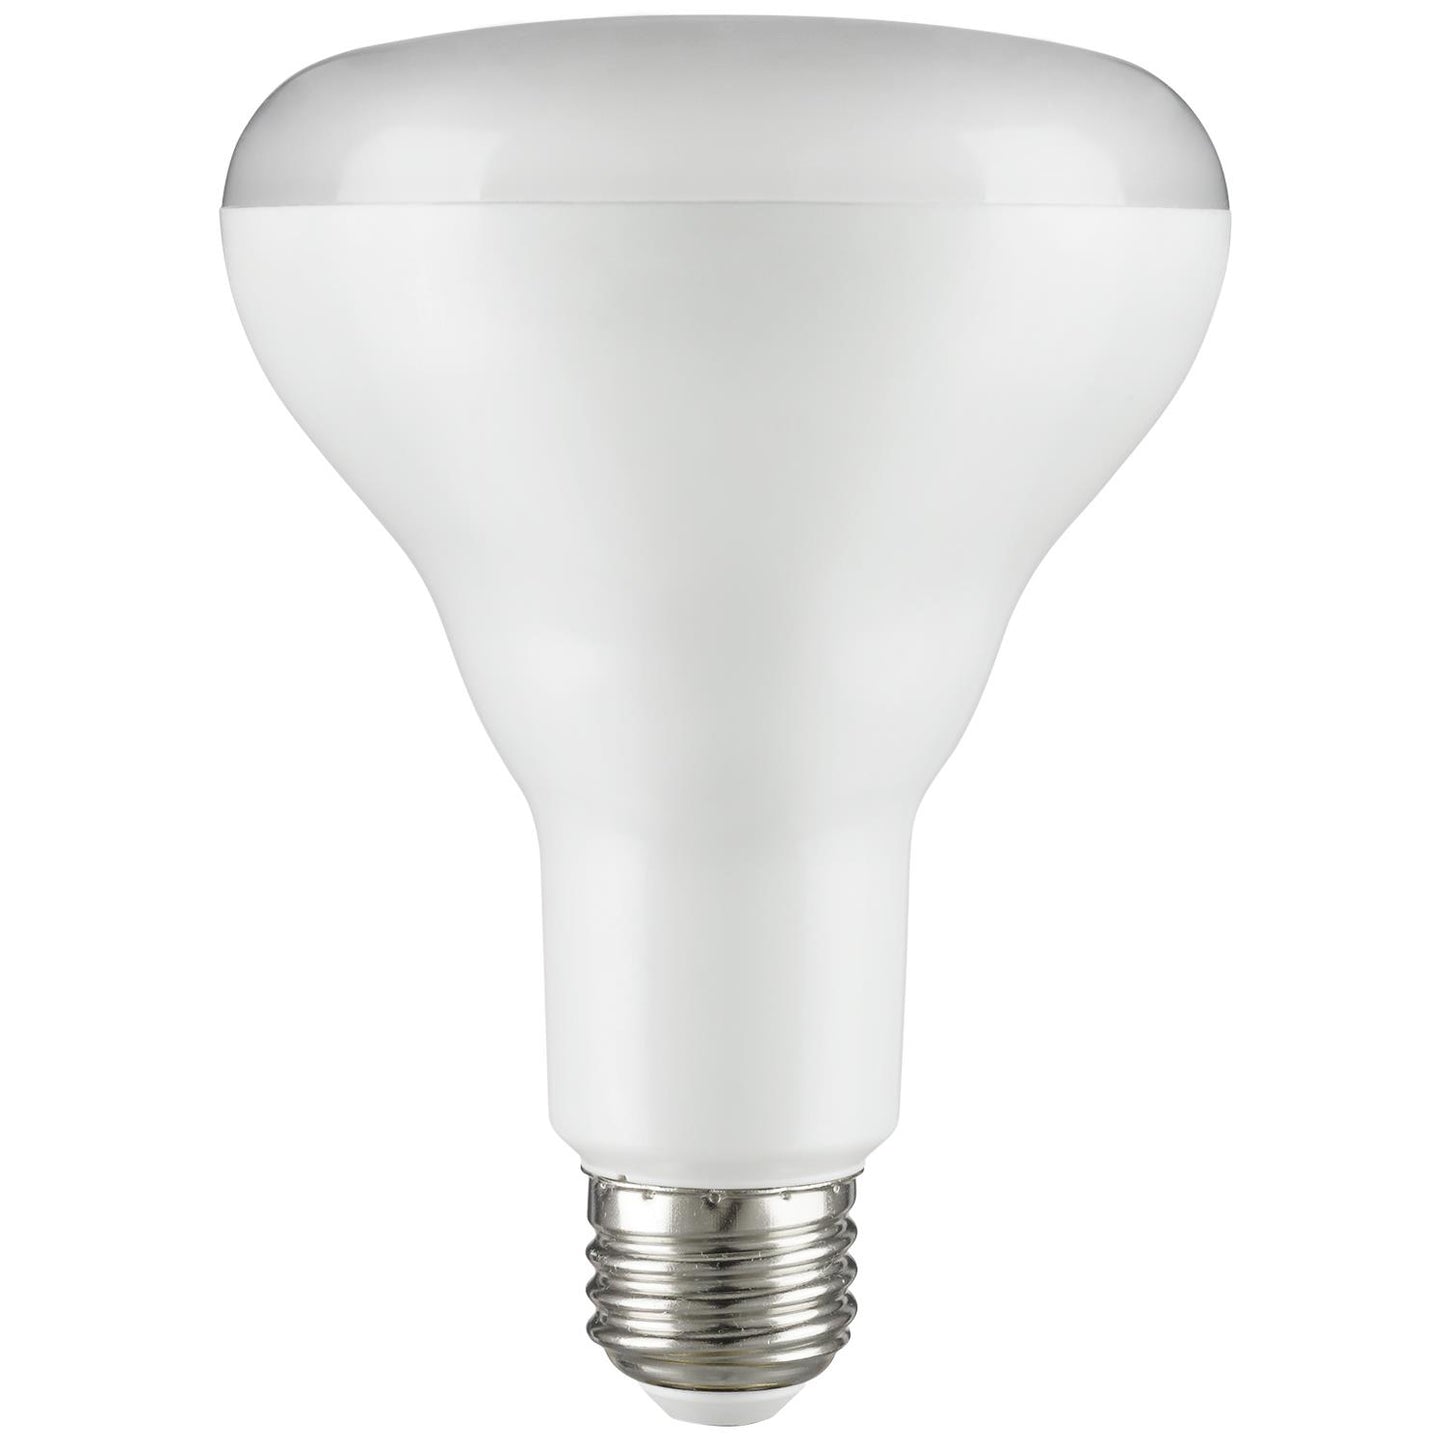 Sunlite LED BR30 Reflector 9W (65W Equivalent) Light Bulb Medium (E26) Base, Super White